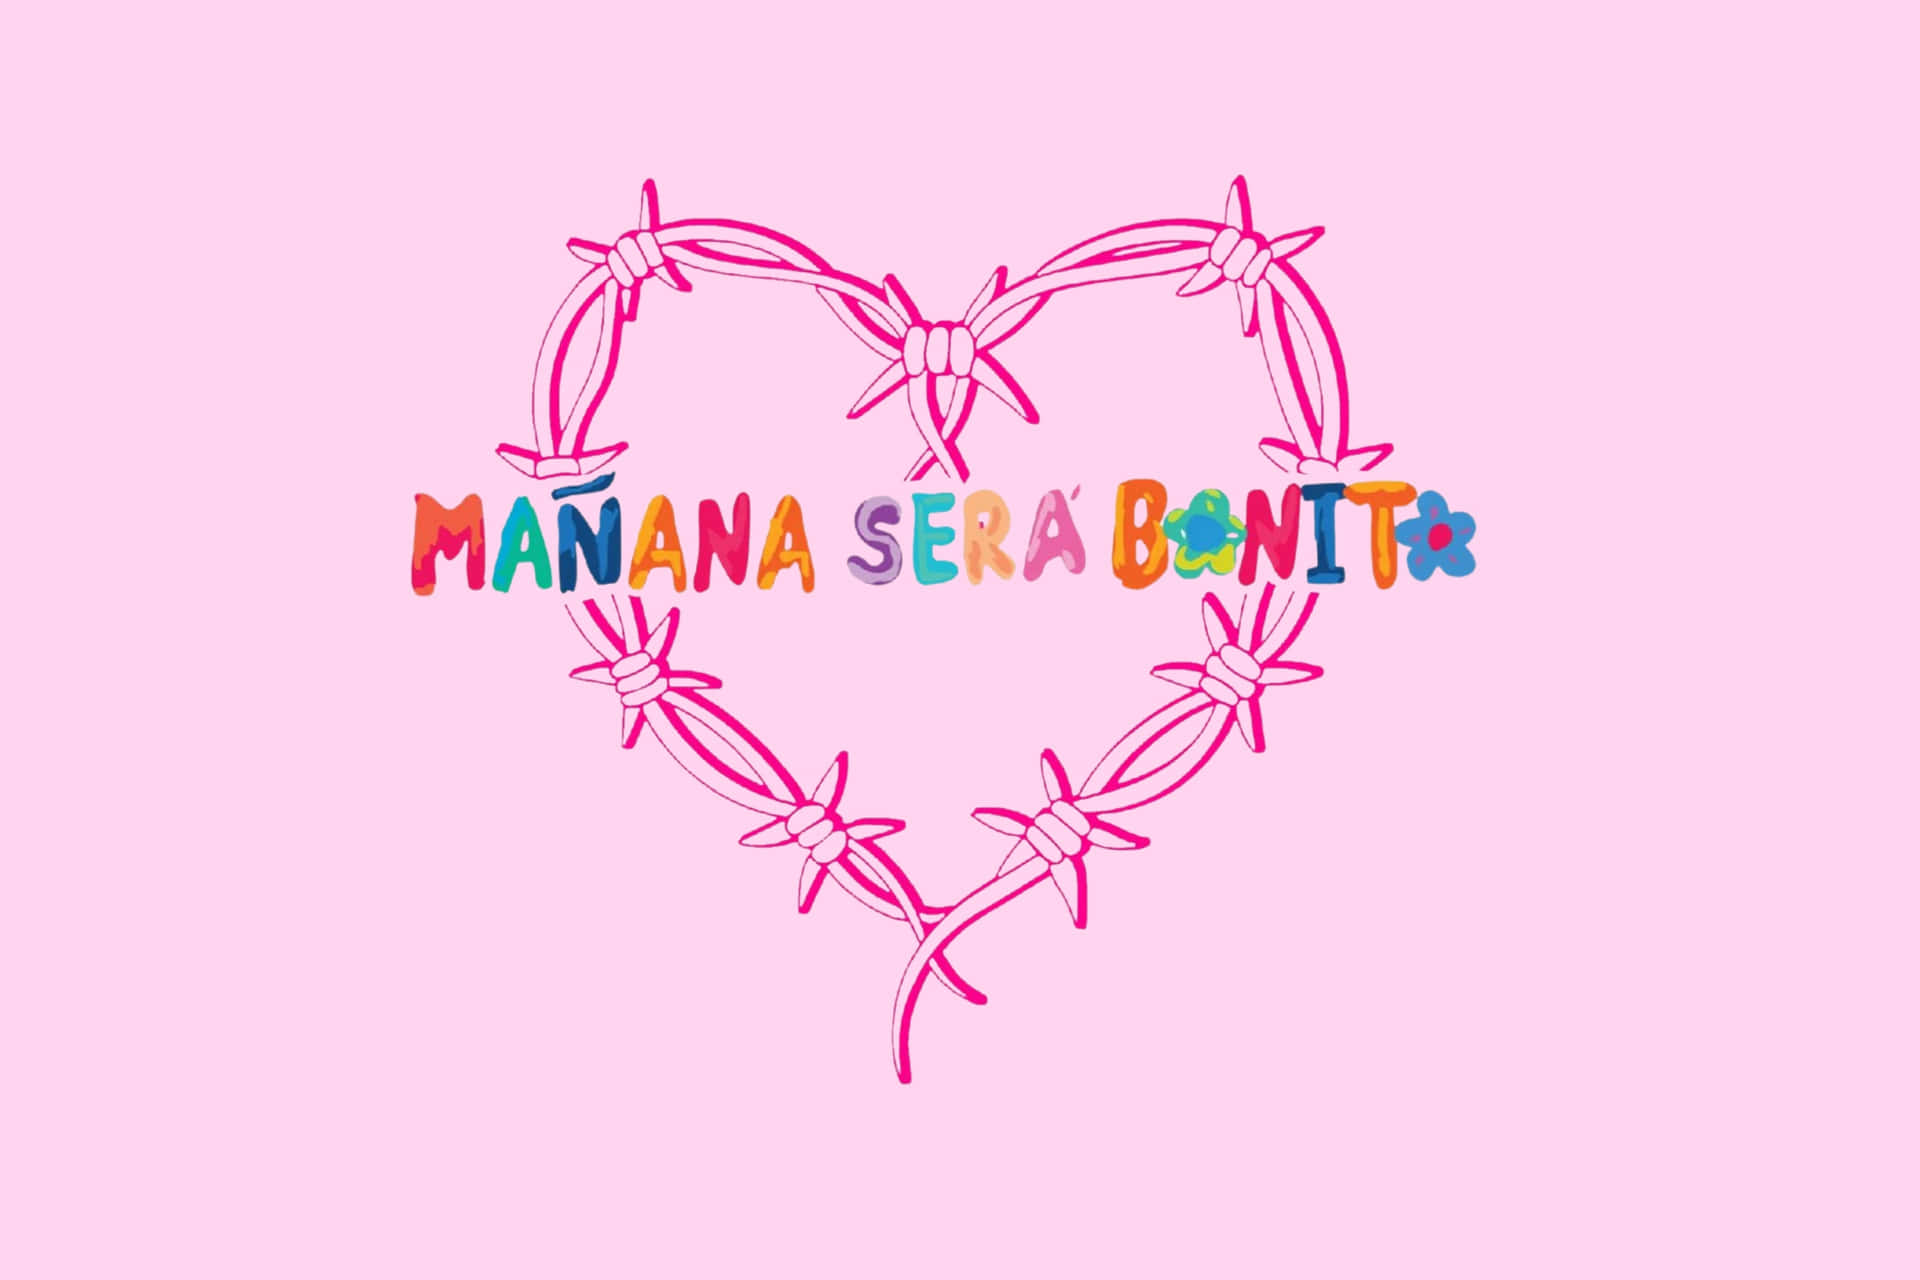 Manana Sera Bonito Heart Illustration Wallpaper